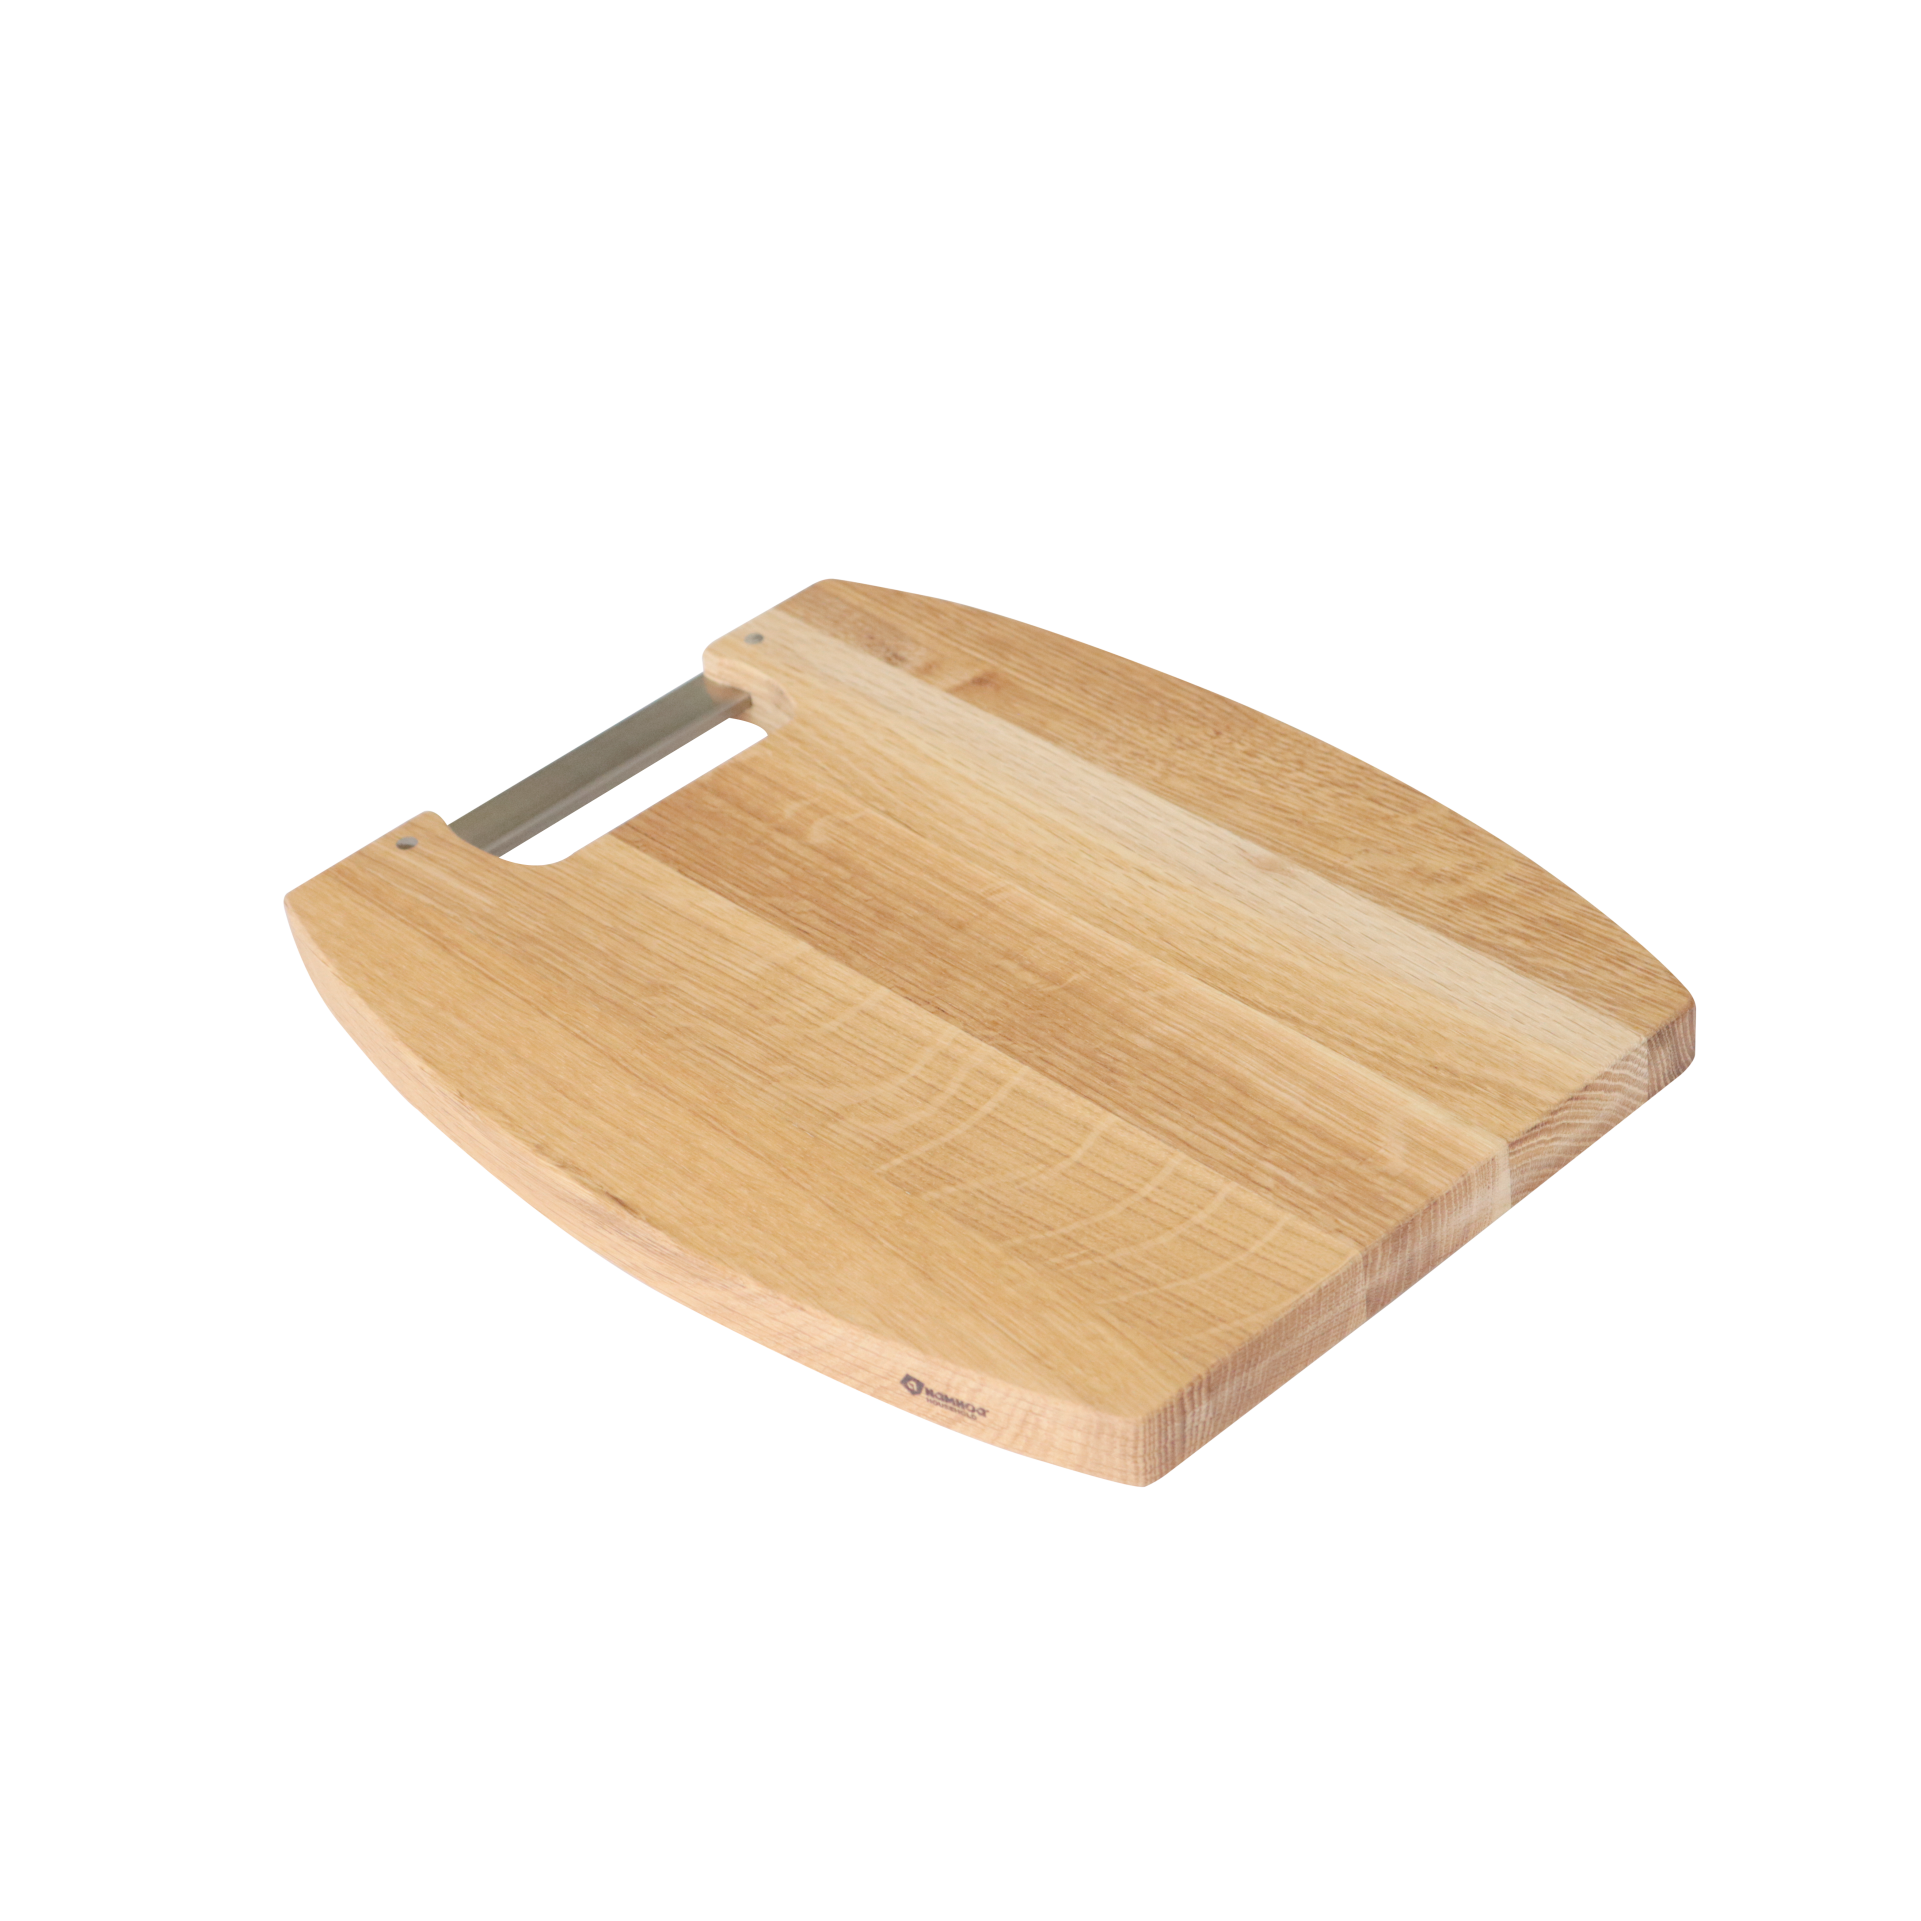 White Oak Cutting board with inox handle